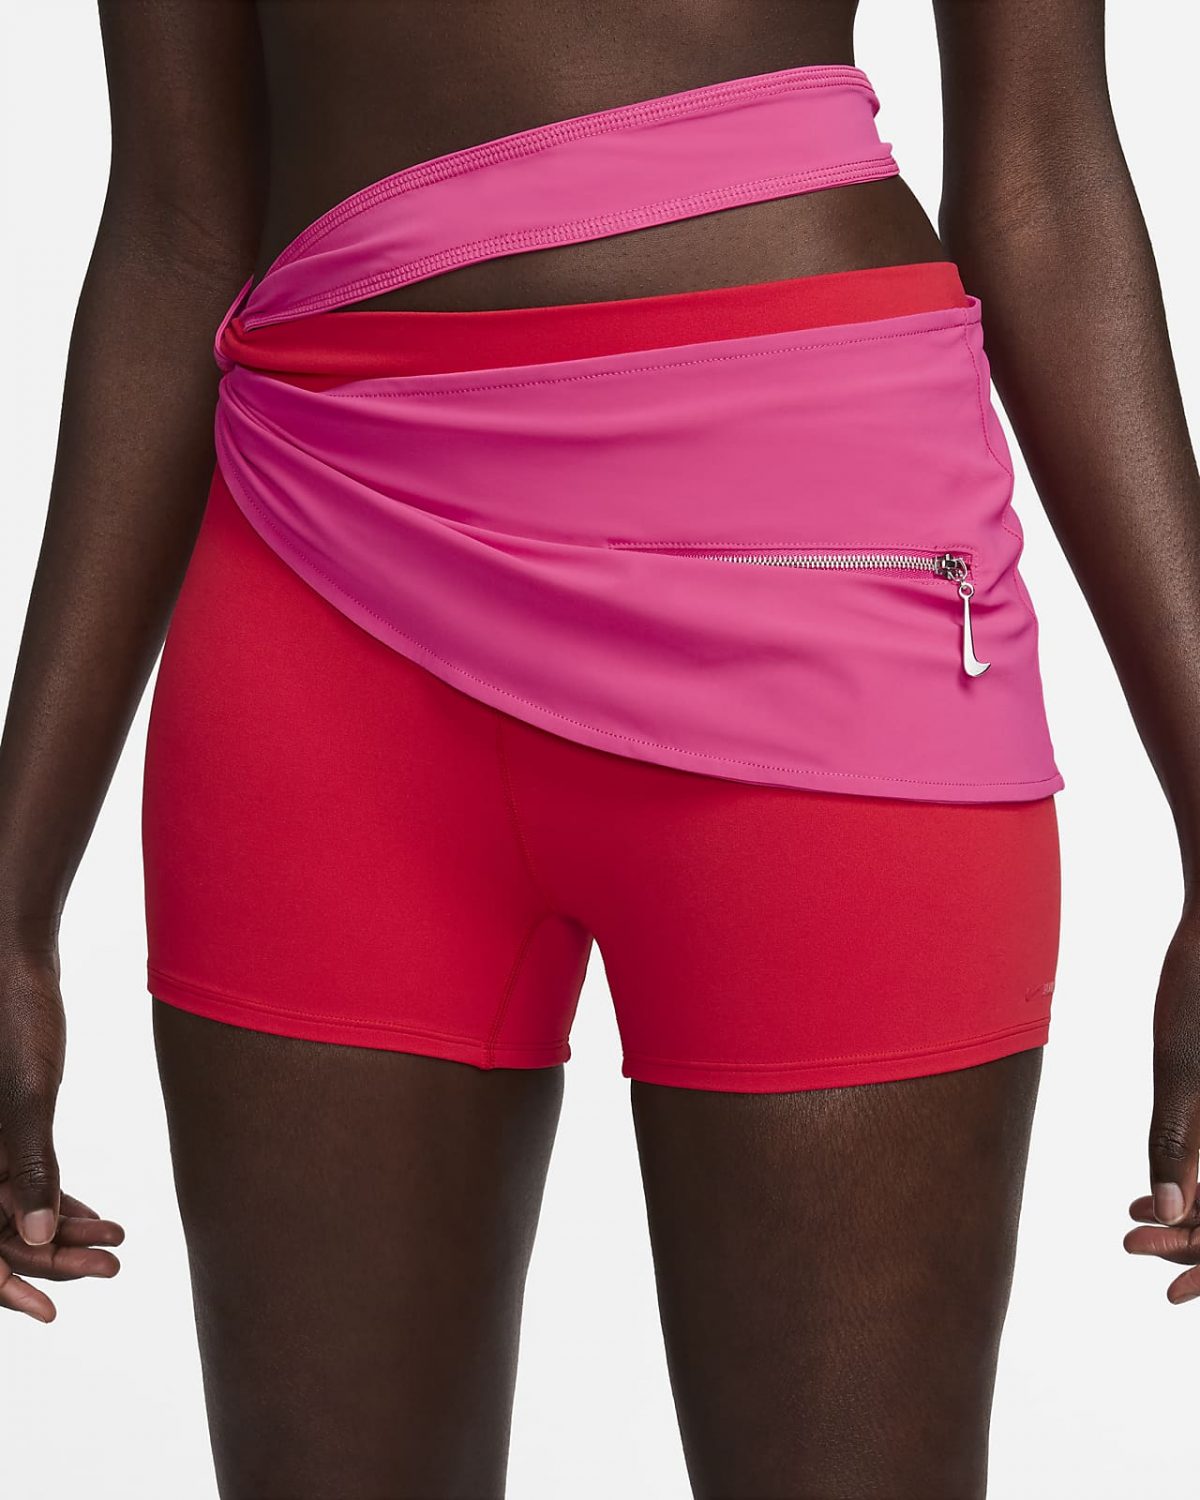 Женские шорты Nike x Jacquemus фотография